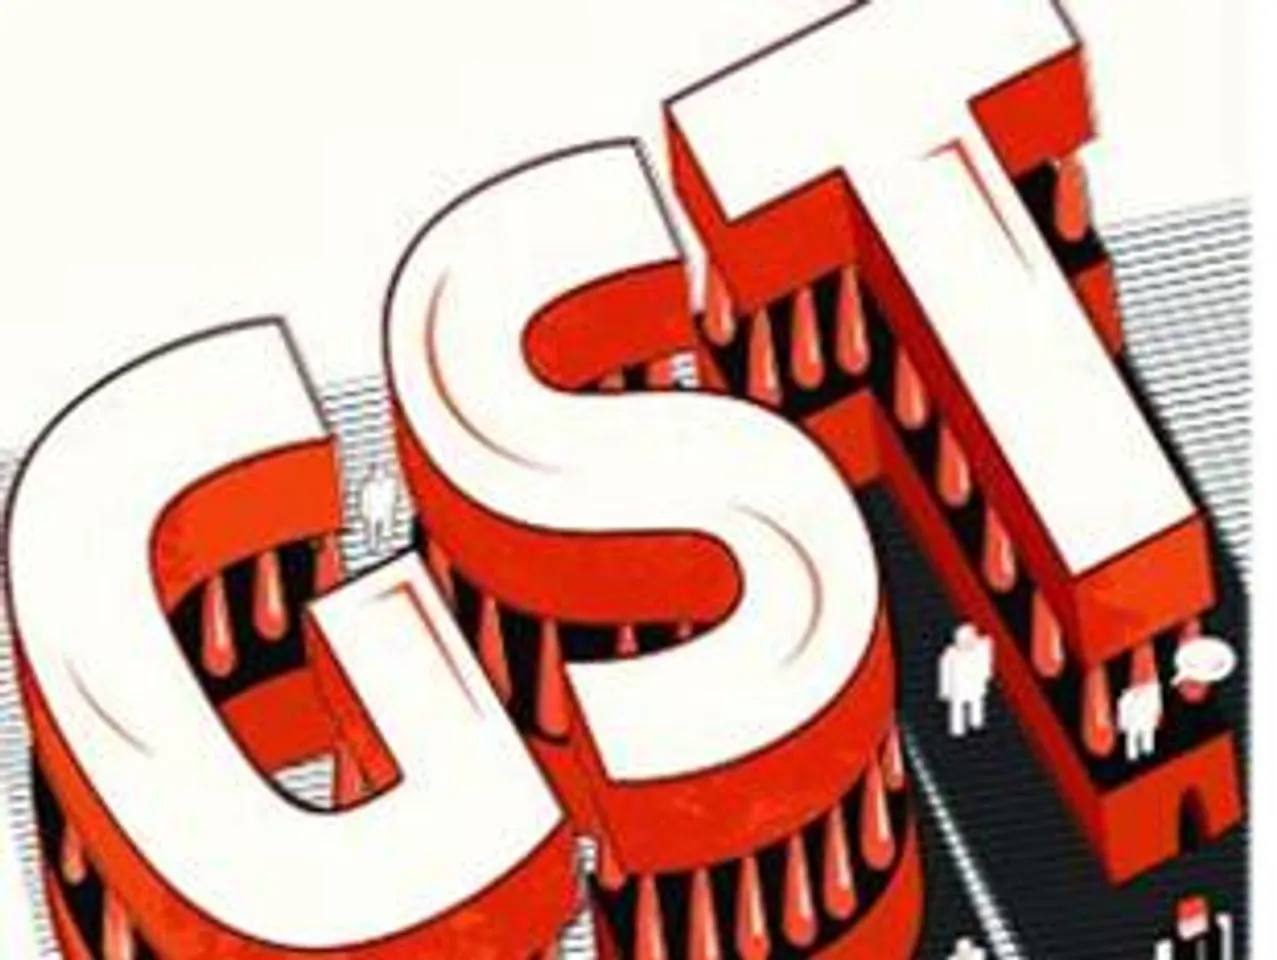 Delhi IT Distributors in Fear of loss after GST